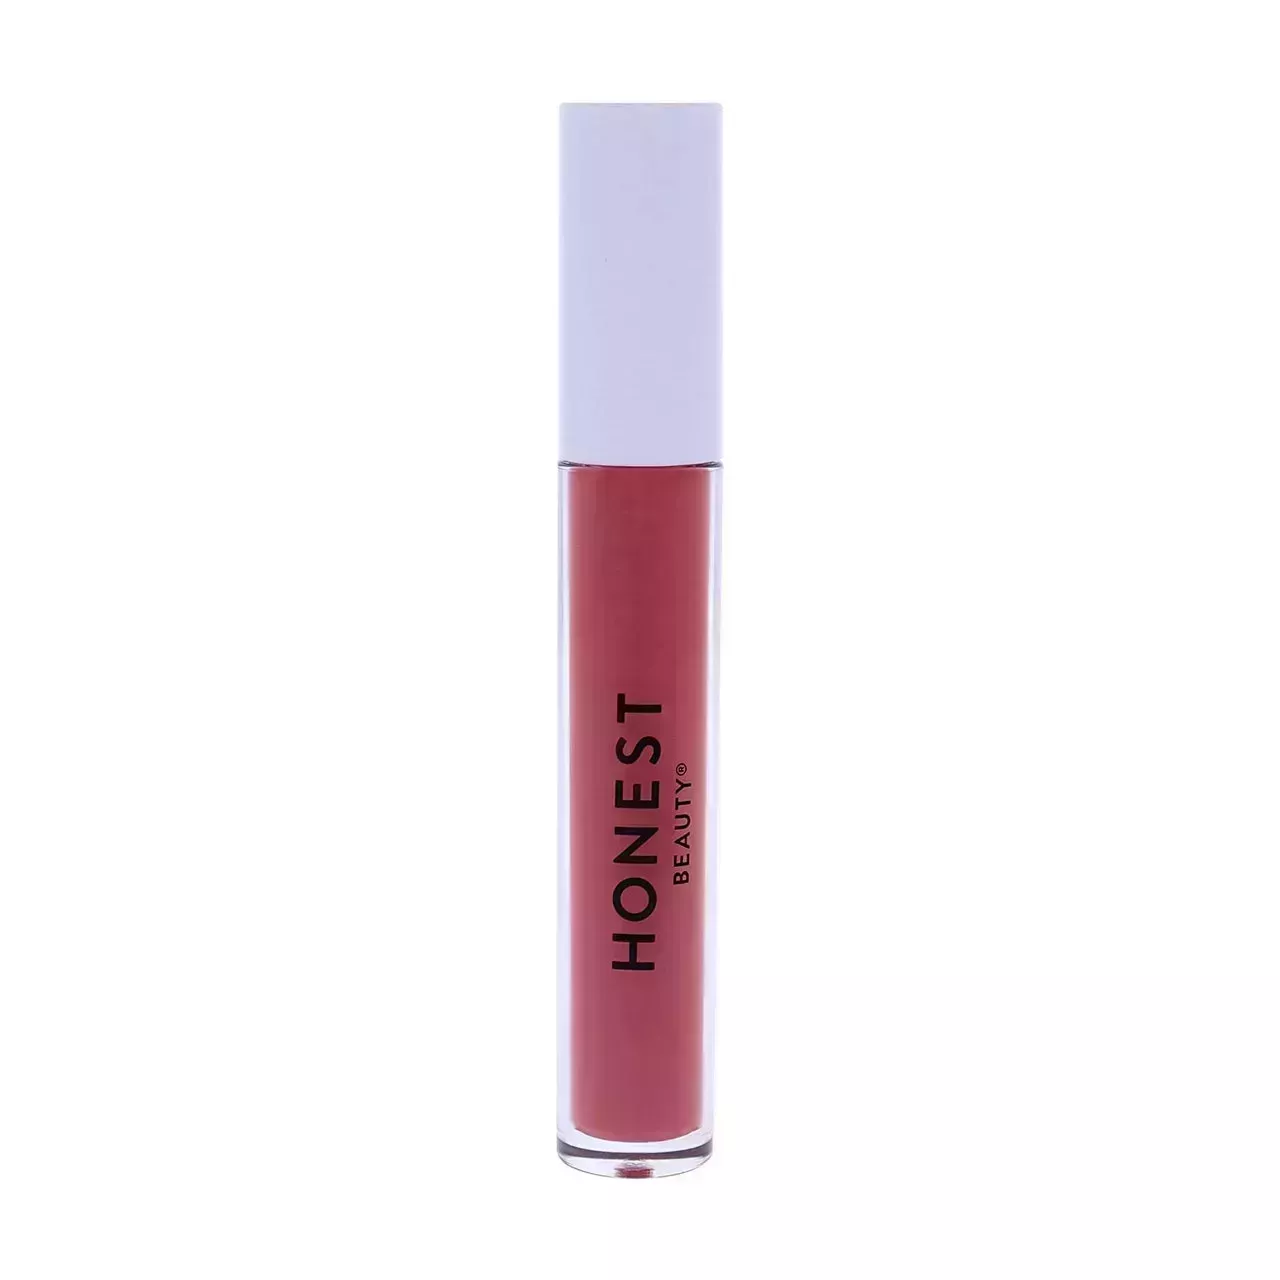 Honest Beauty Liquid Lipstick vila of berry liquid lipstick with white cap on white background